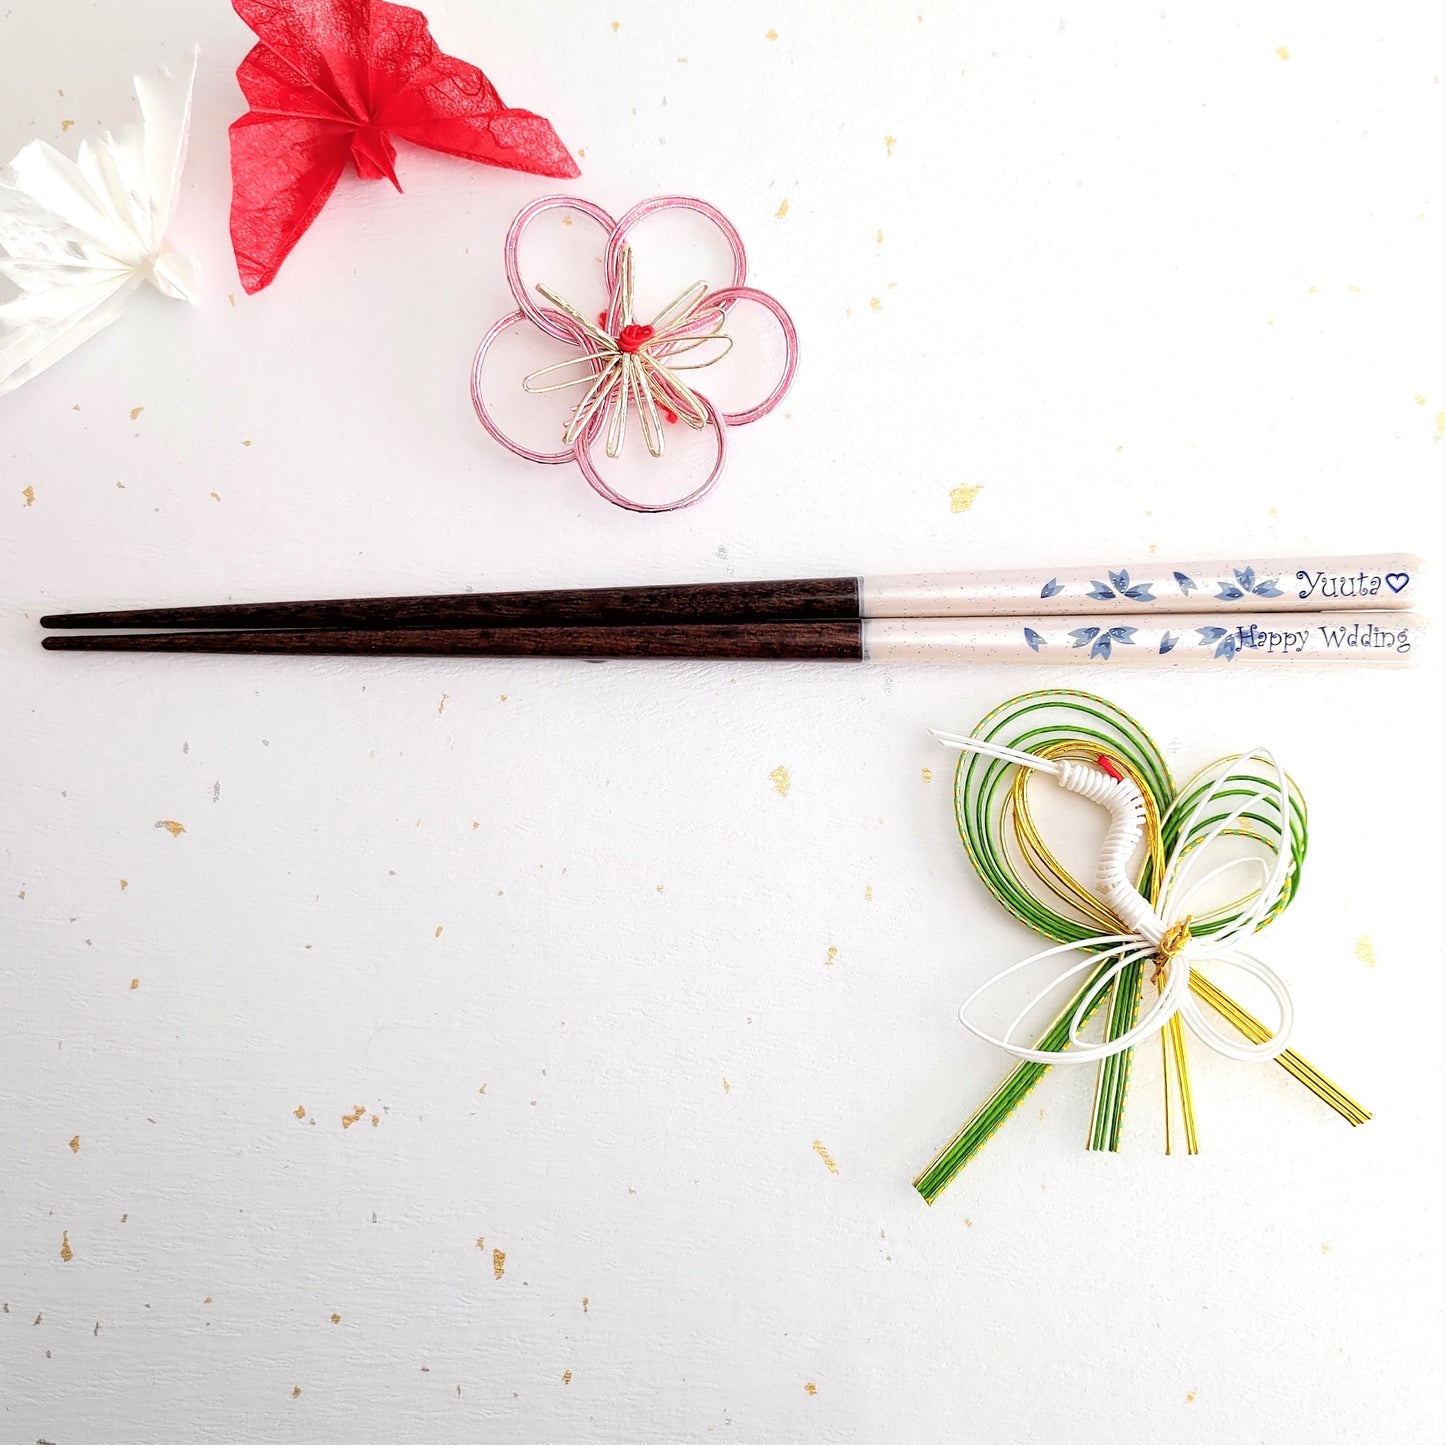 Sakura dream Japanese chopsticks blue pink  - SINGLE PAIR